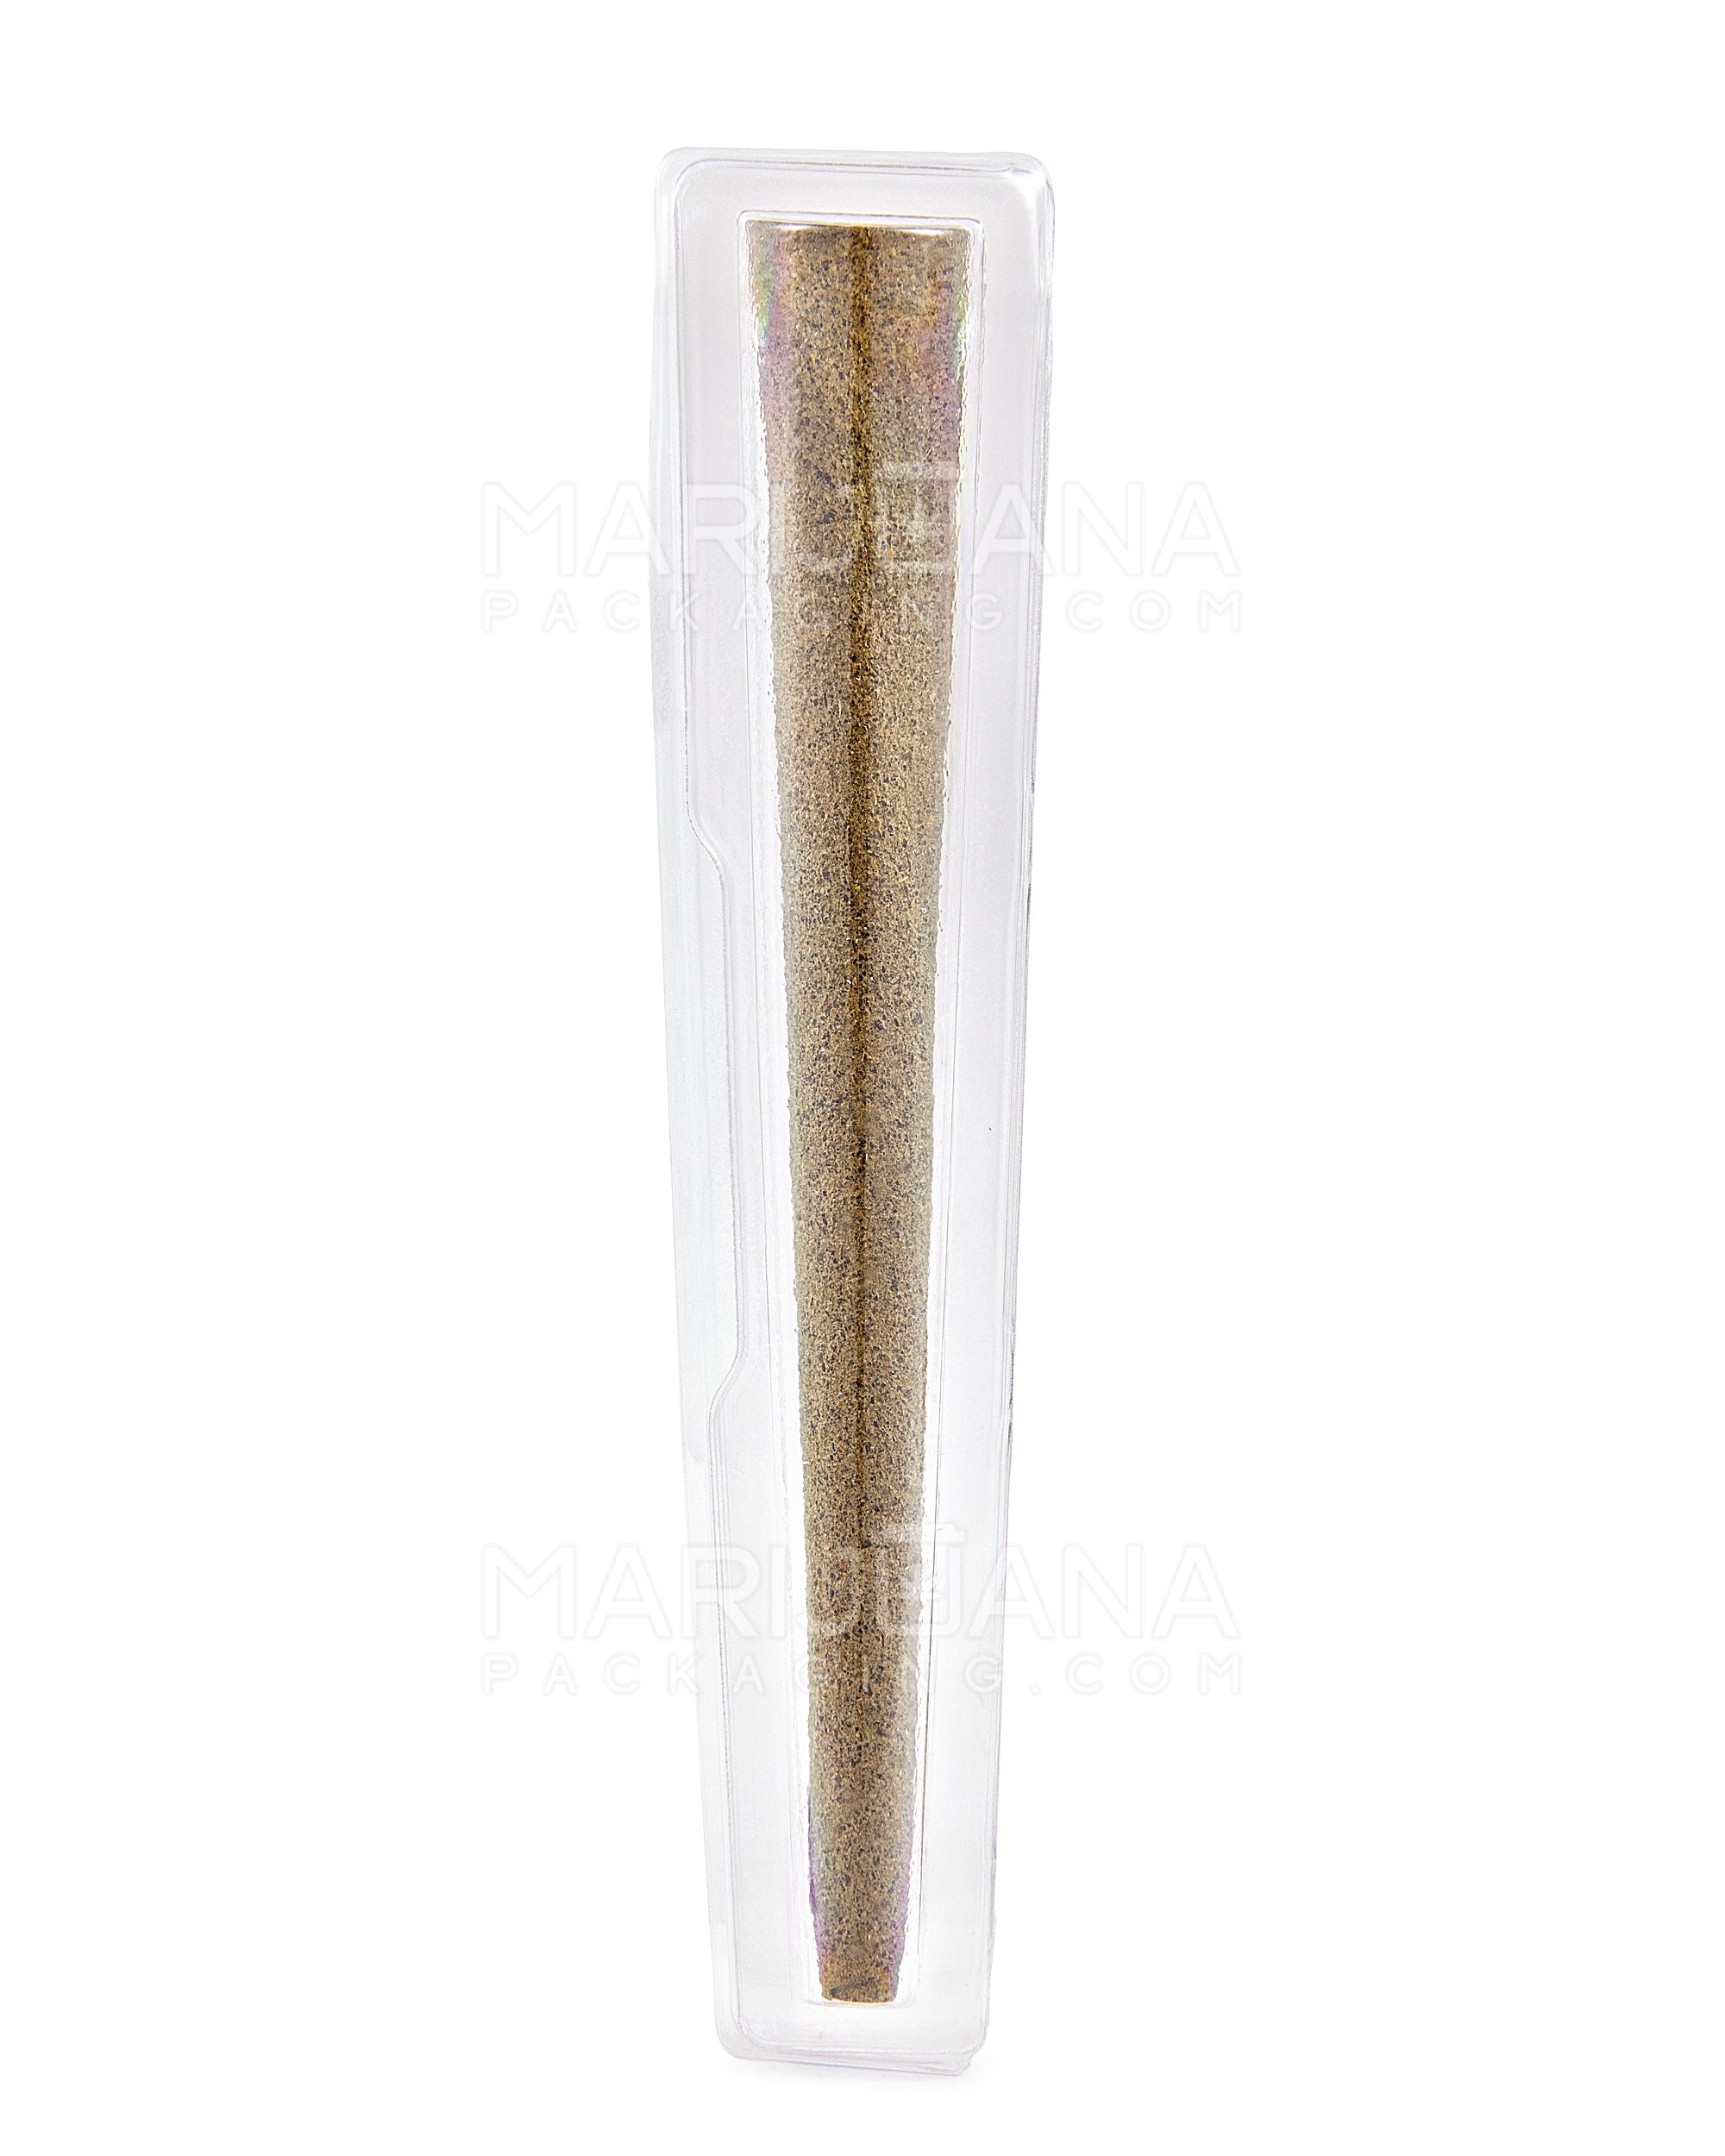 KUSH | 'Retail Display' Ultra Herbal Hemp Conical Wraps | 157mm - Lemonade - 15 Count - 5